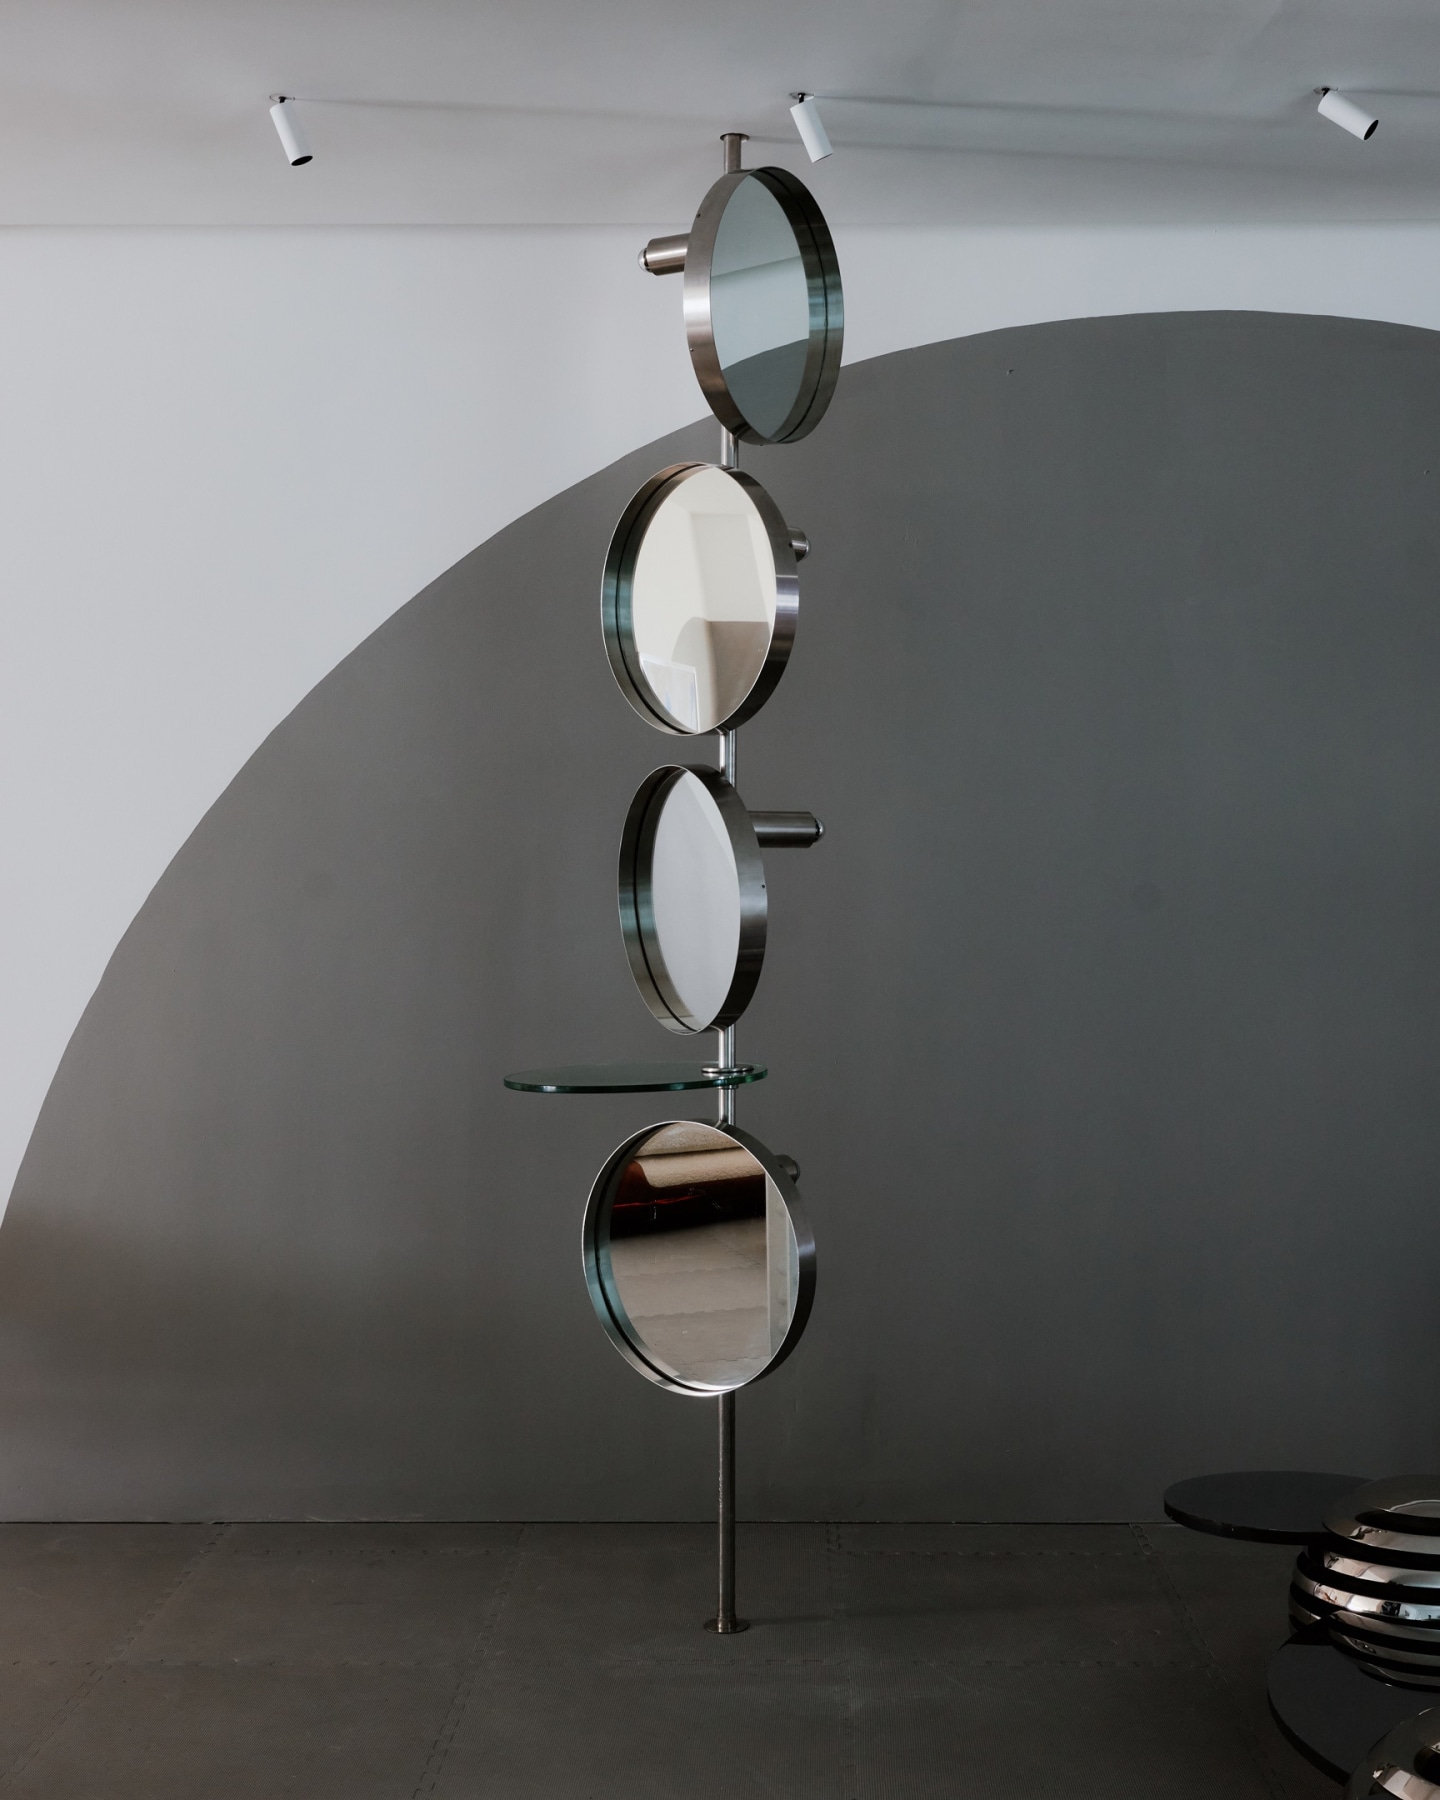 Circular mirror lamp in install